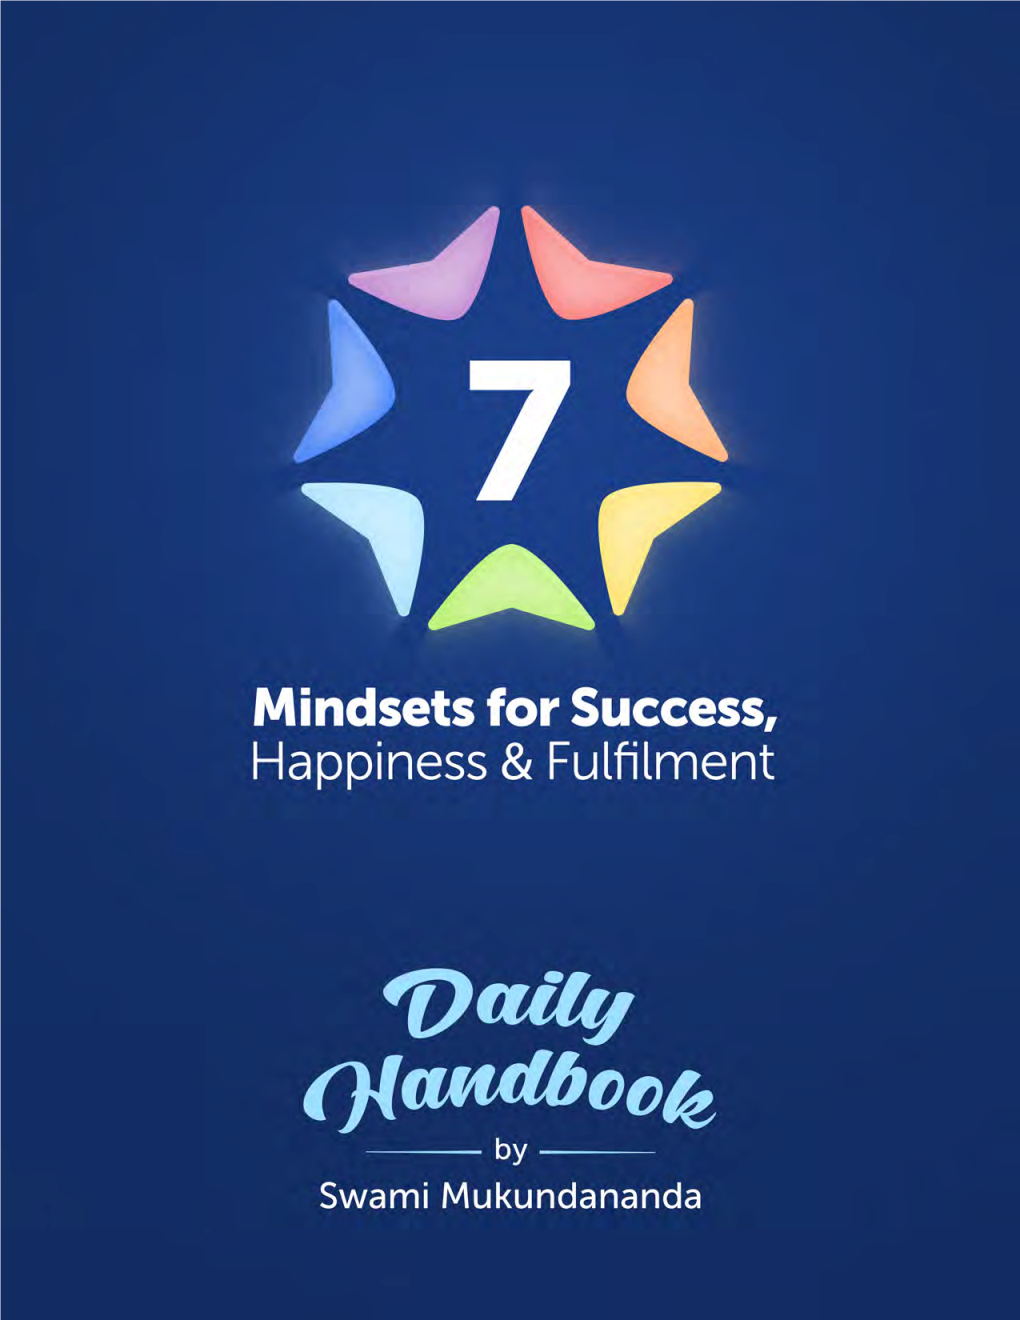 Daily Handbook Day2